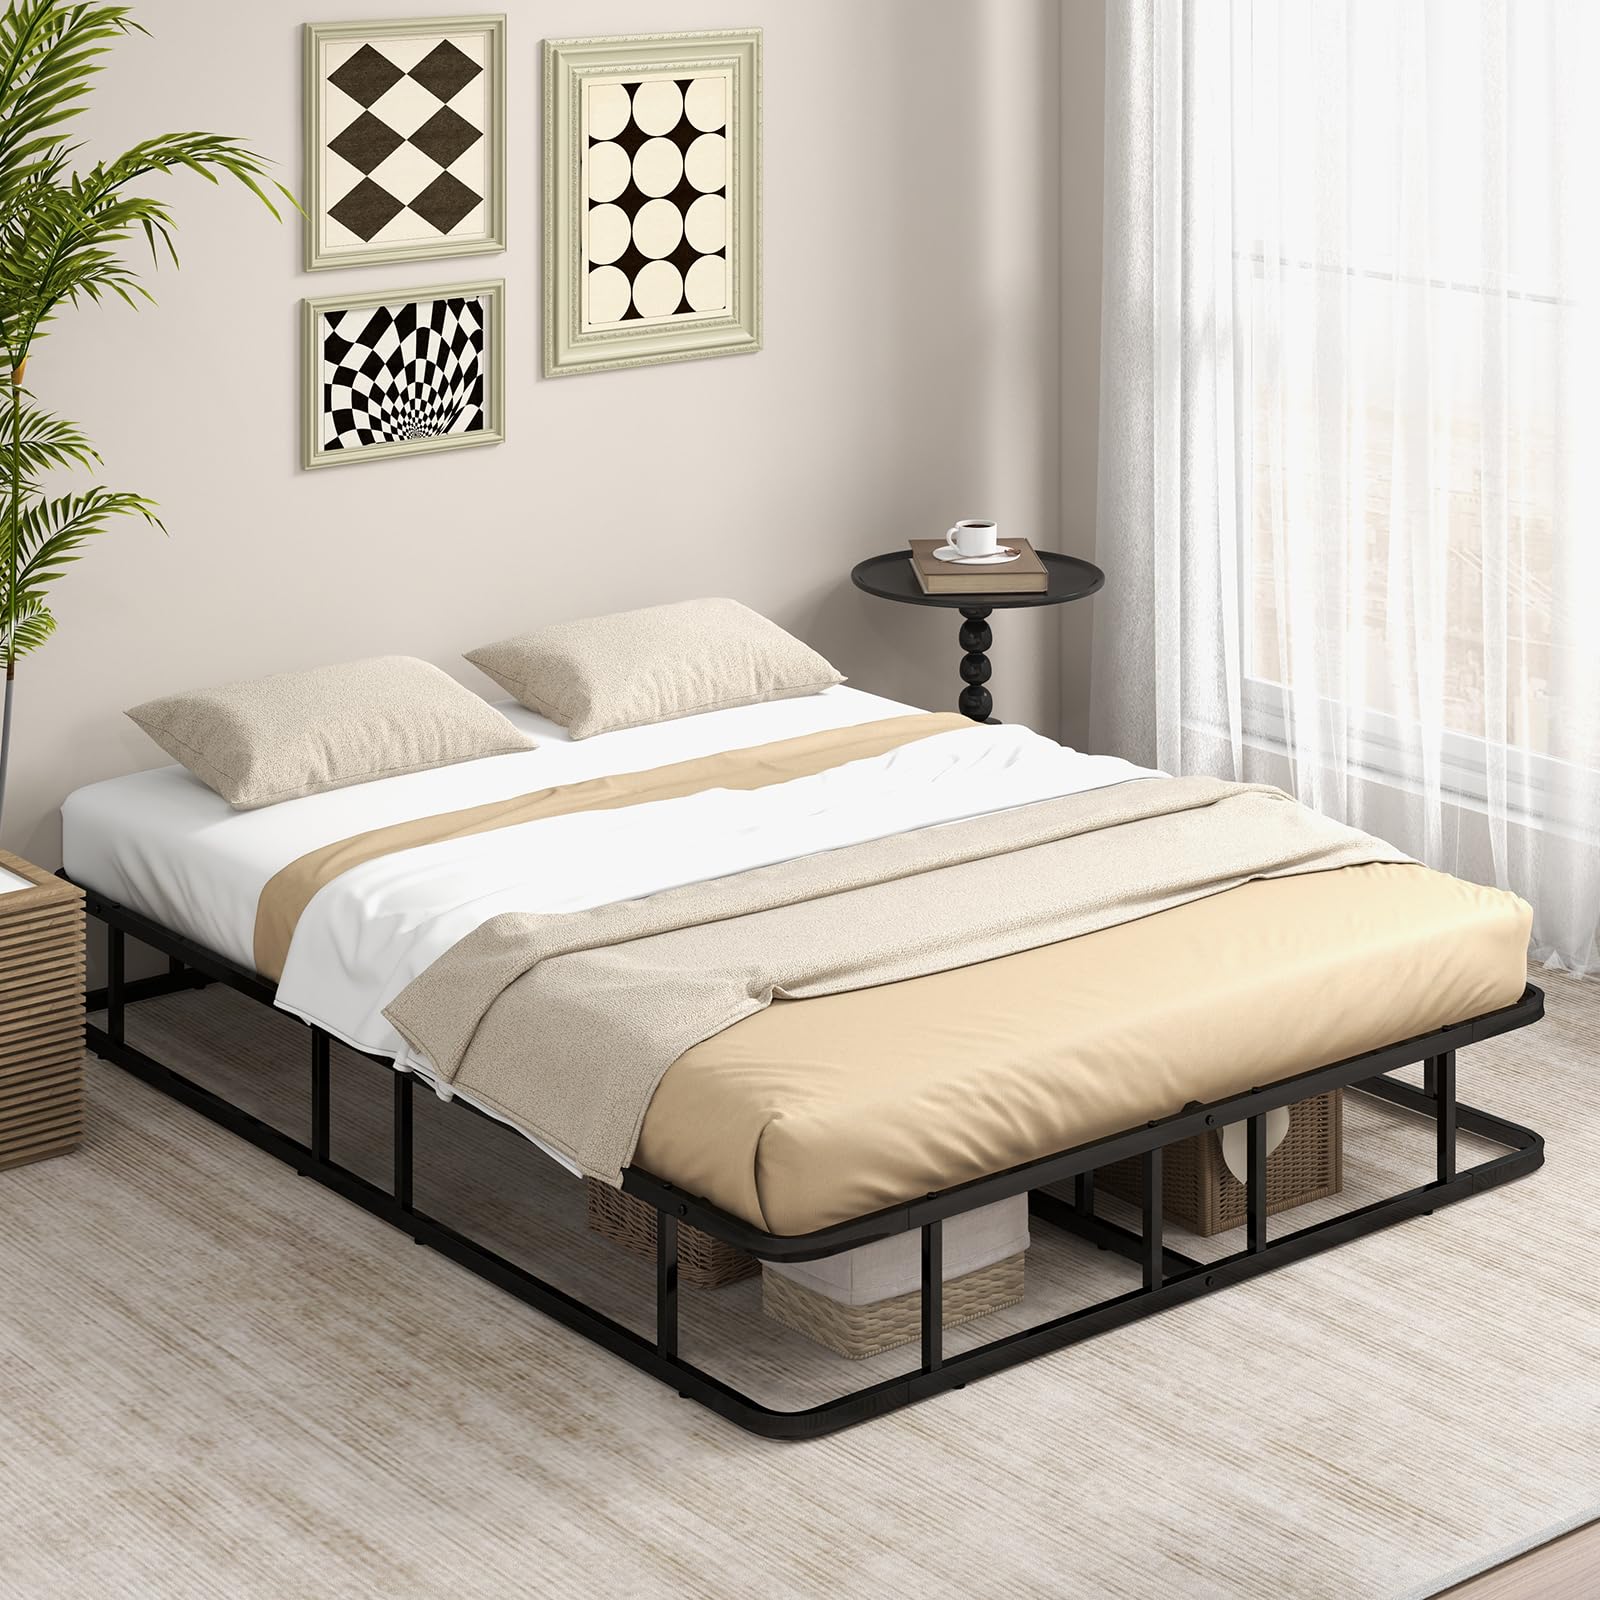 Giantex 10 Inch Bed Frame Queen Size, Metal Platform Queen Bed Frame, Heavy Duty Steel Slat Support